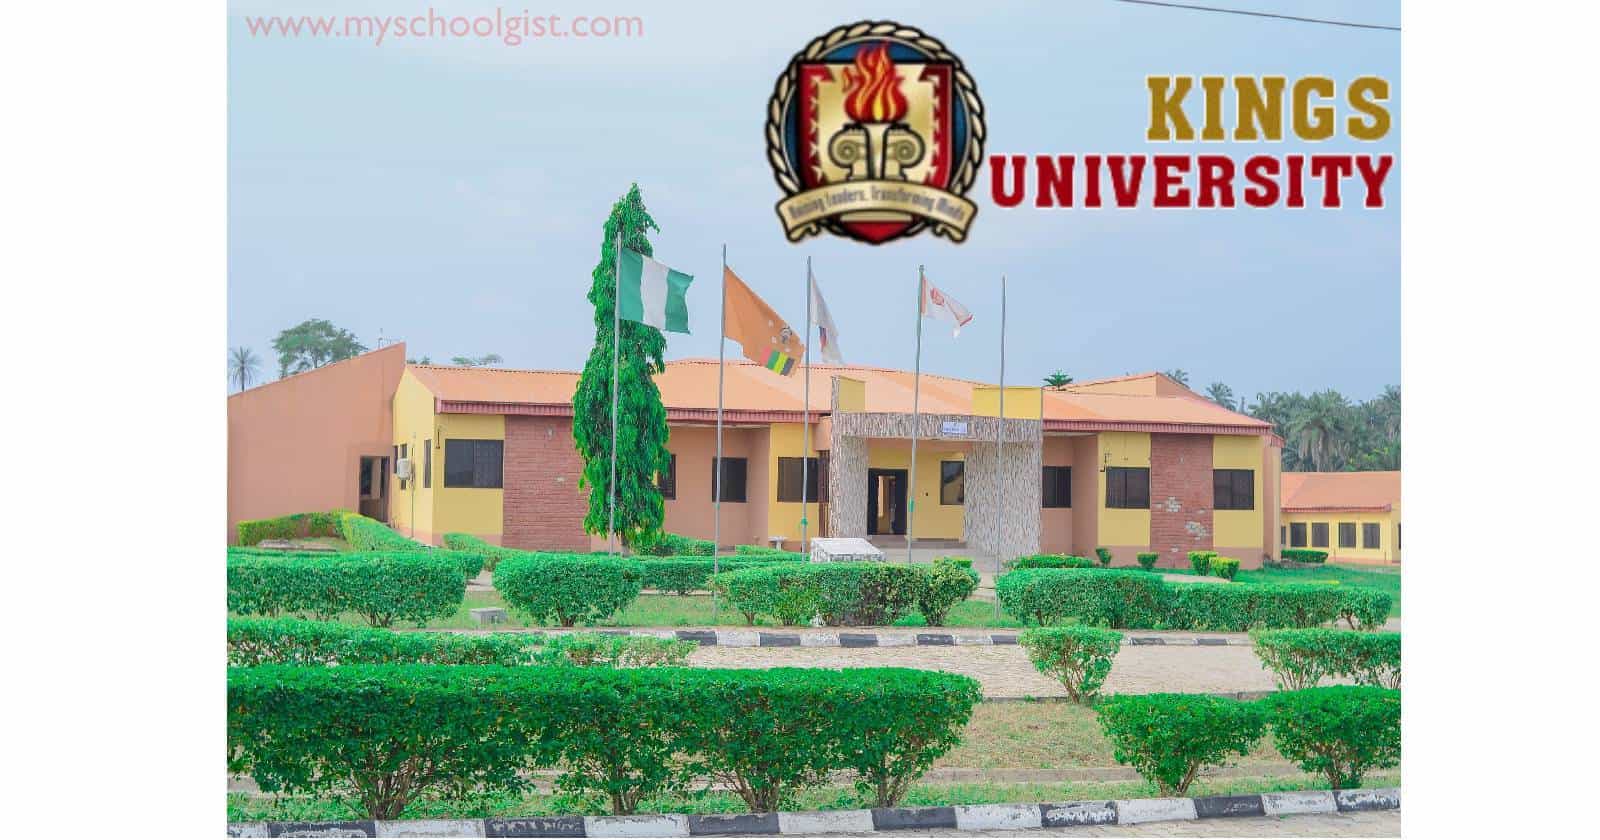 Kings University Convocation Ceremony